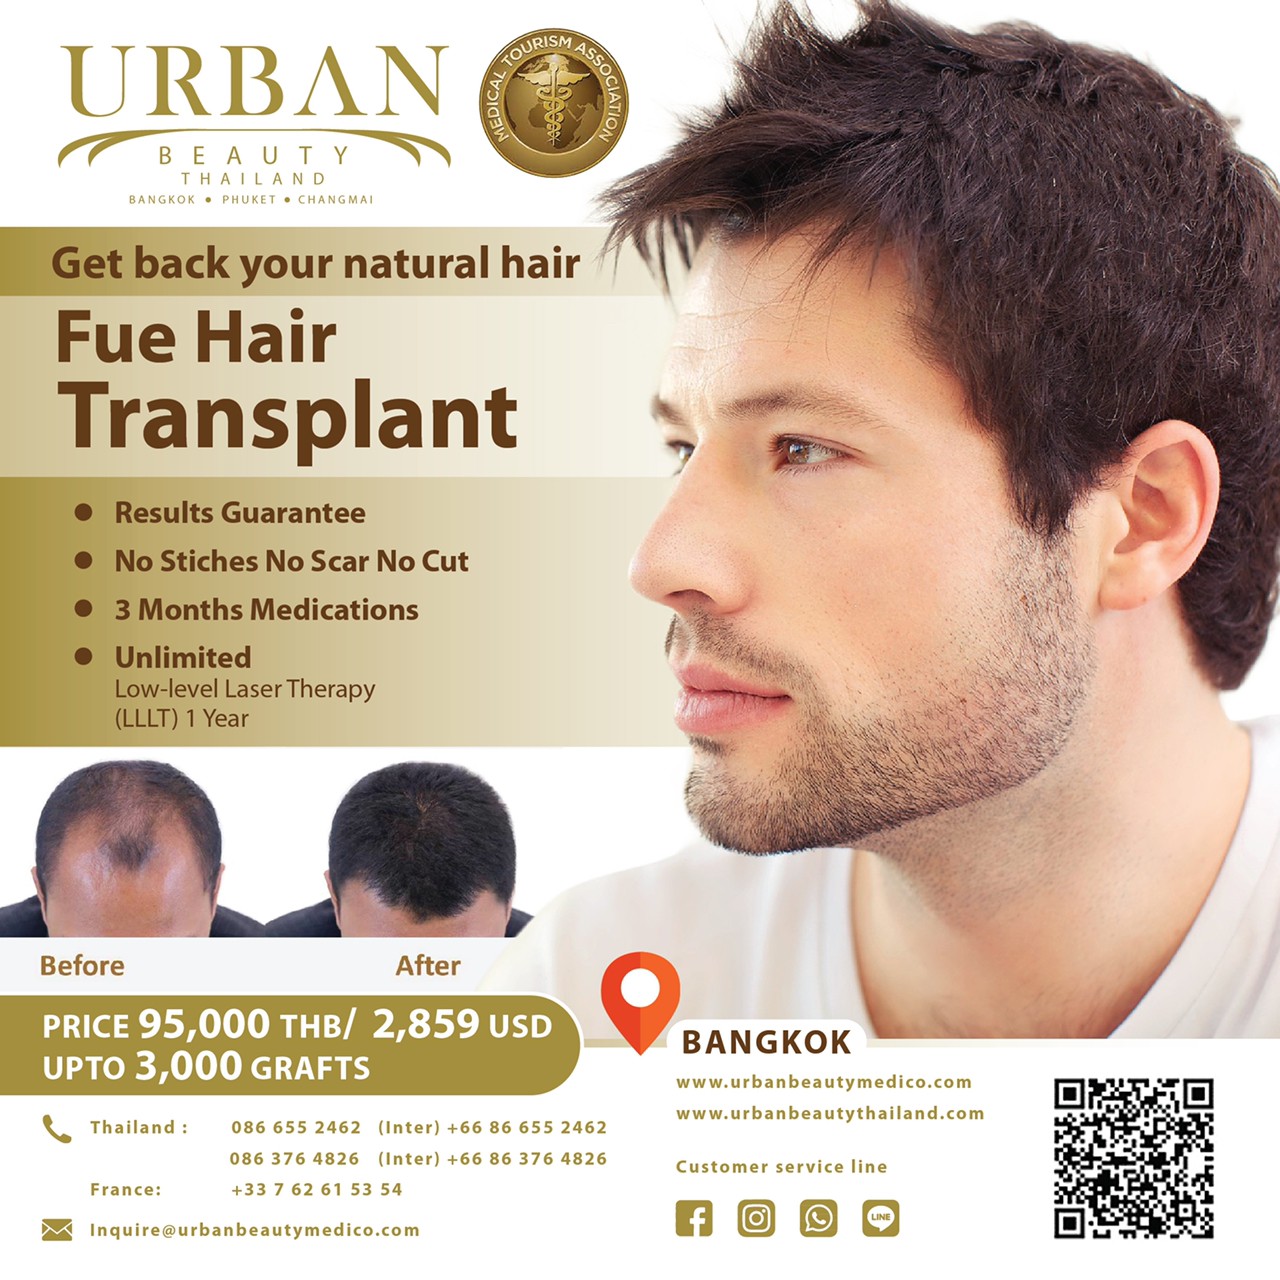 Hair Restoration Thailand - Urban Beauty Thailand